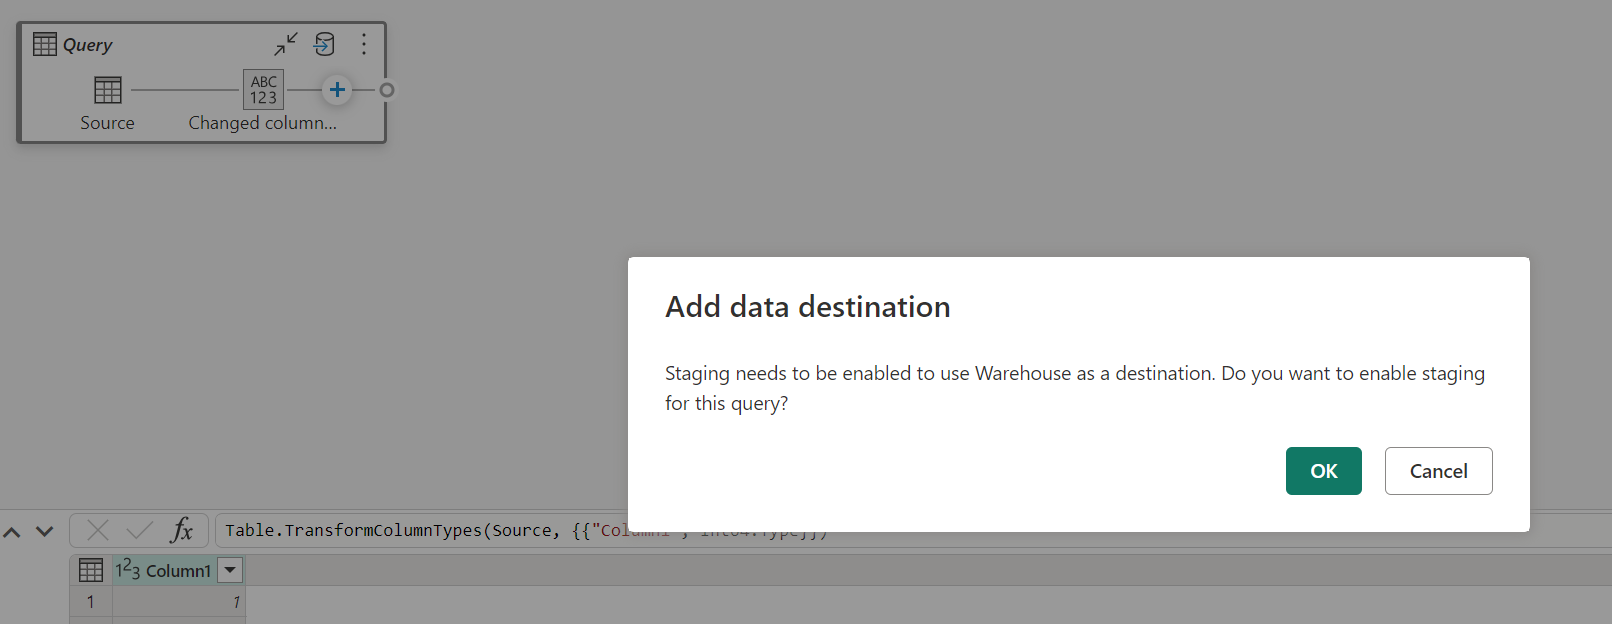 Screenshot of the Add data destination warning.